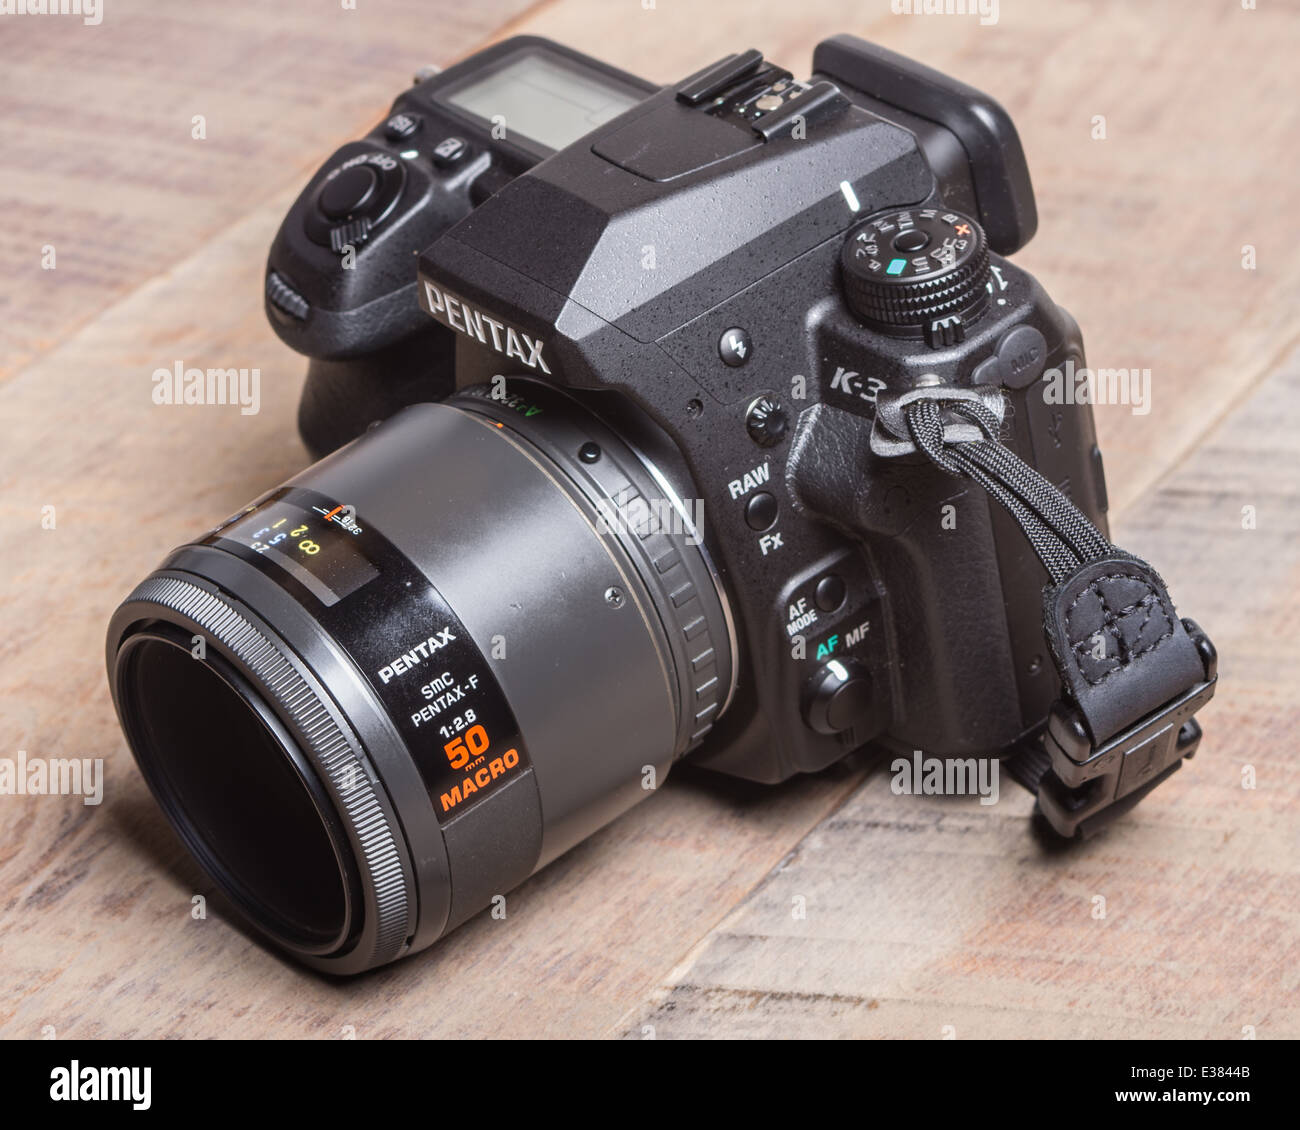 Appareil photo reflex numérique Pentax K-3 avec objectif macro 50mm Photo  Stock - Alamy